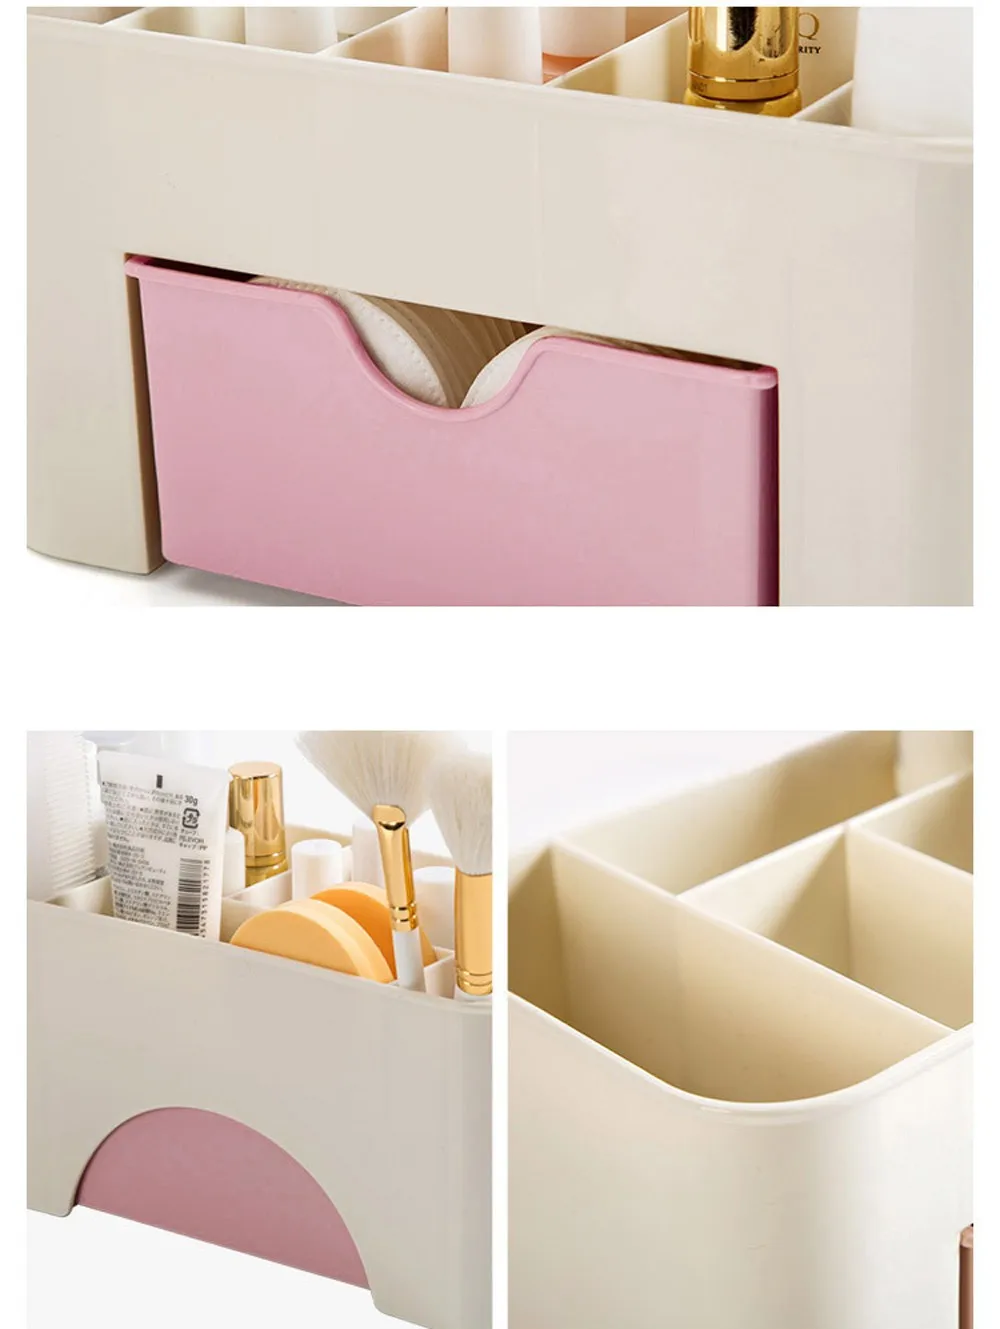 Plastic Makeup Organizer MakeUp Brush Storage Box with Drawer Cotton Swab Stick Storage Case Escritori organizador de maquillaje